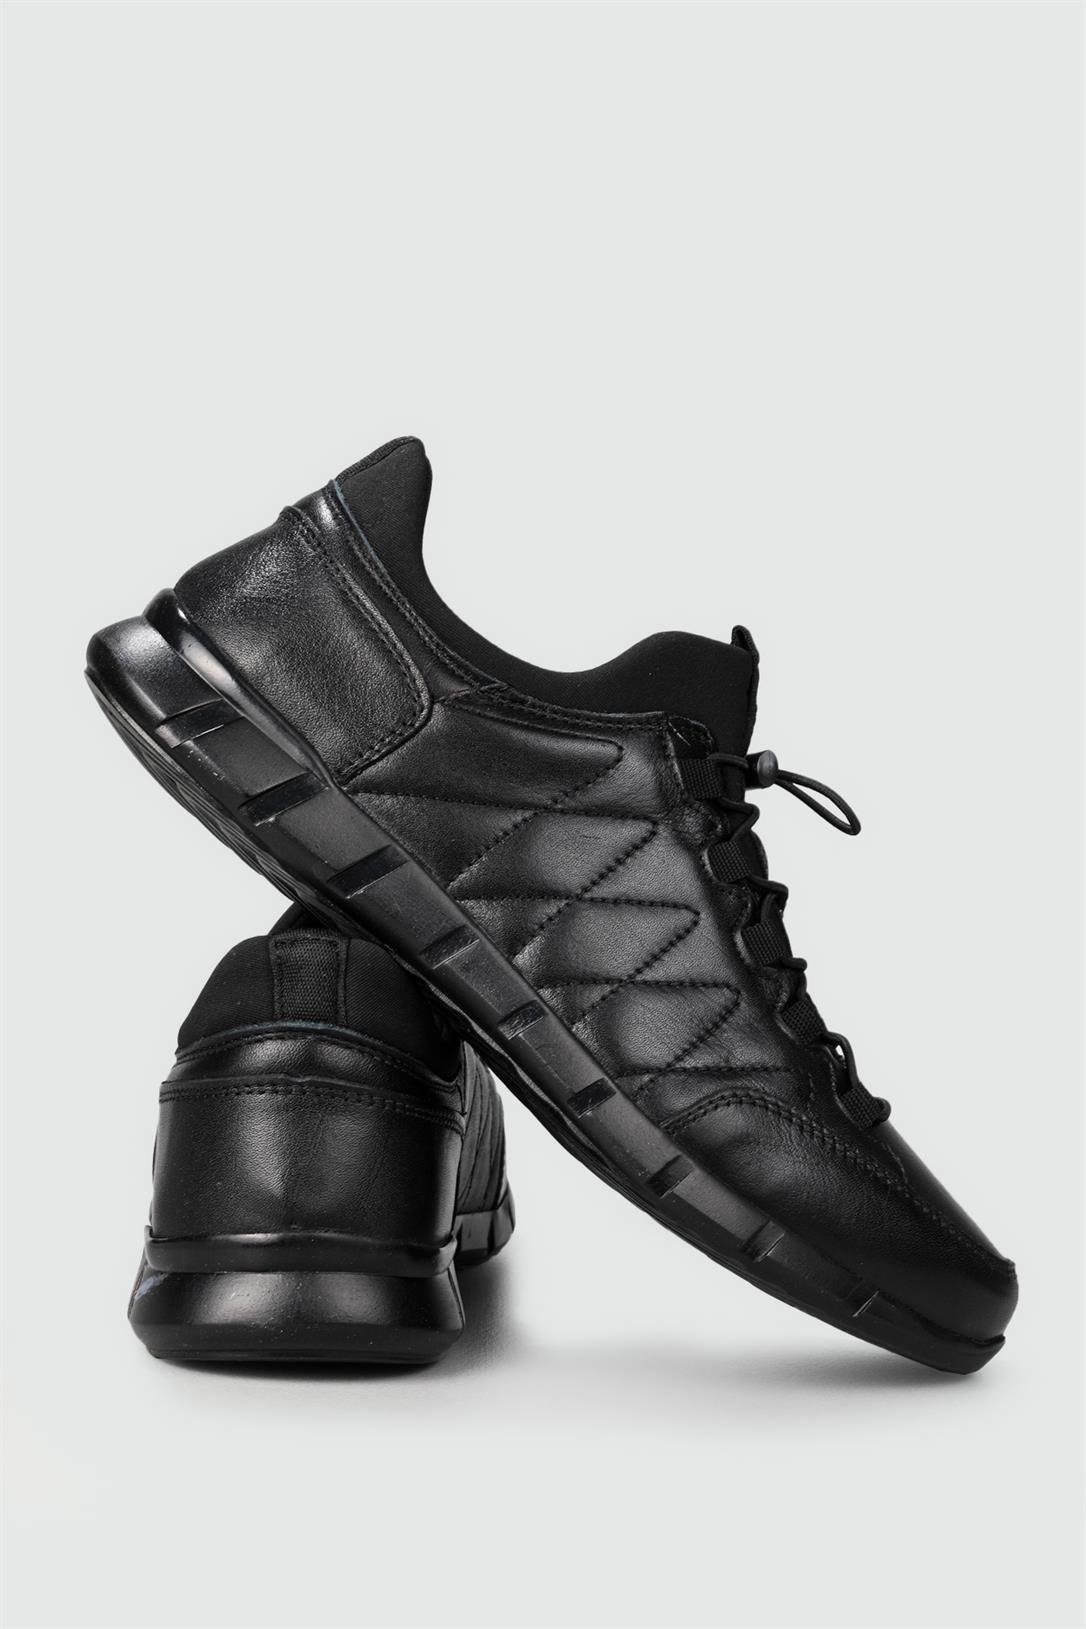 Secure Deri Rahat Comfort Siyah Nubuk Erkek Ayakkabı 2018 | Ayakkabı City